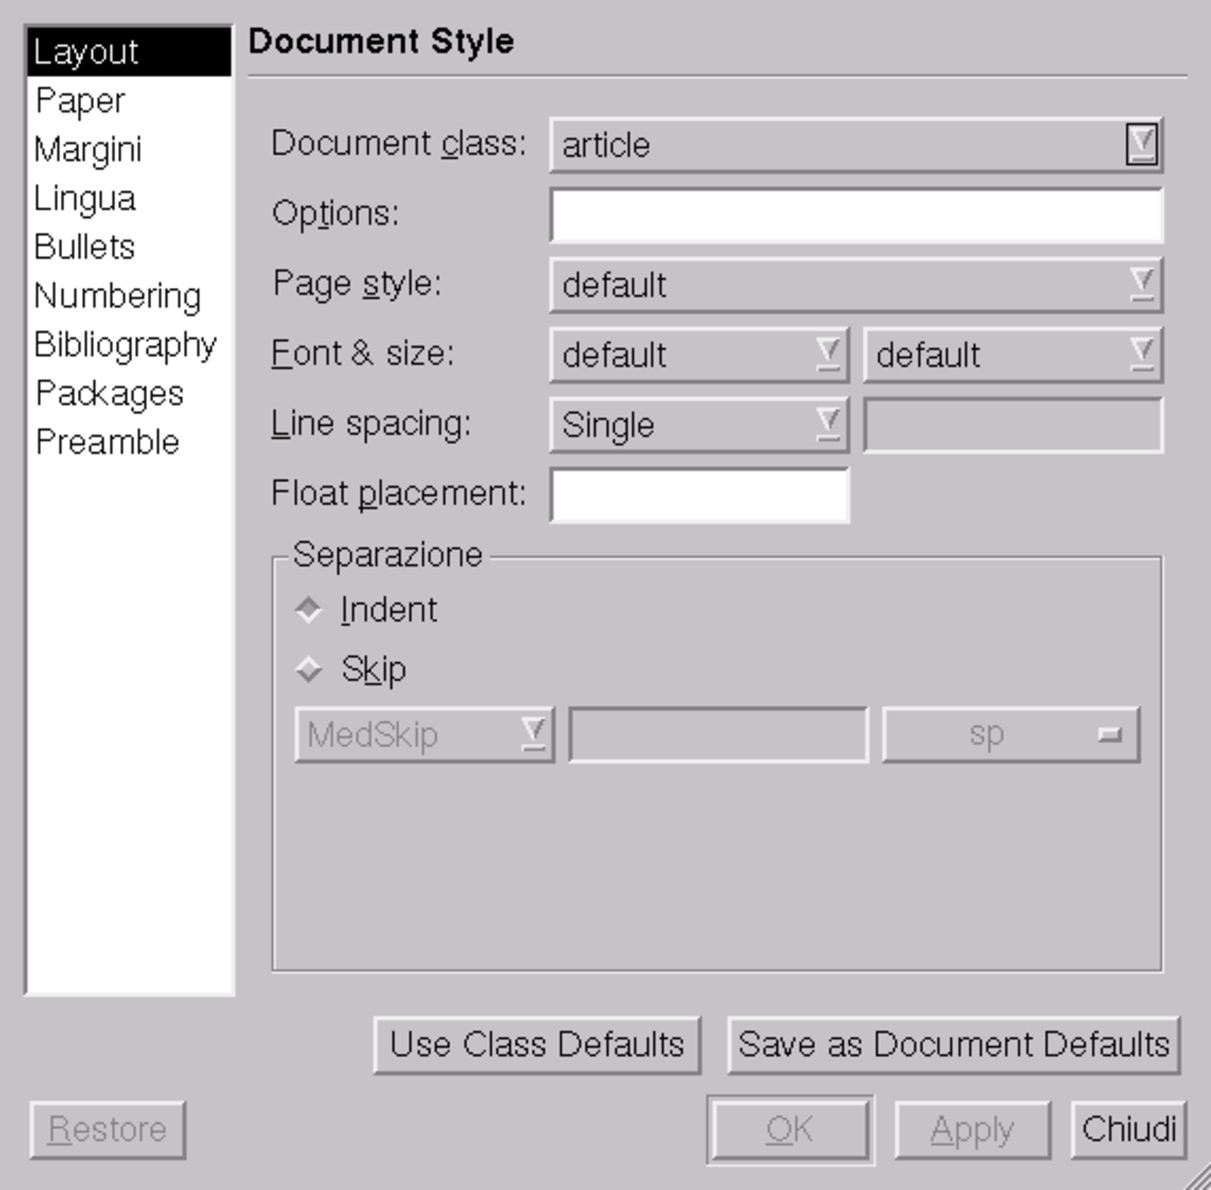 lyx-layout-document